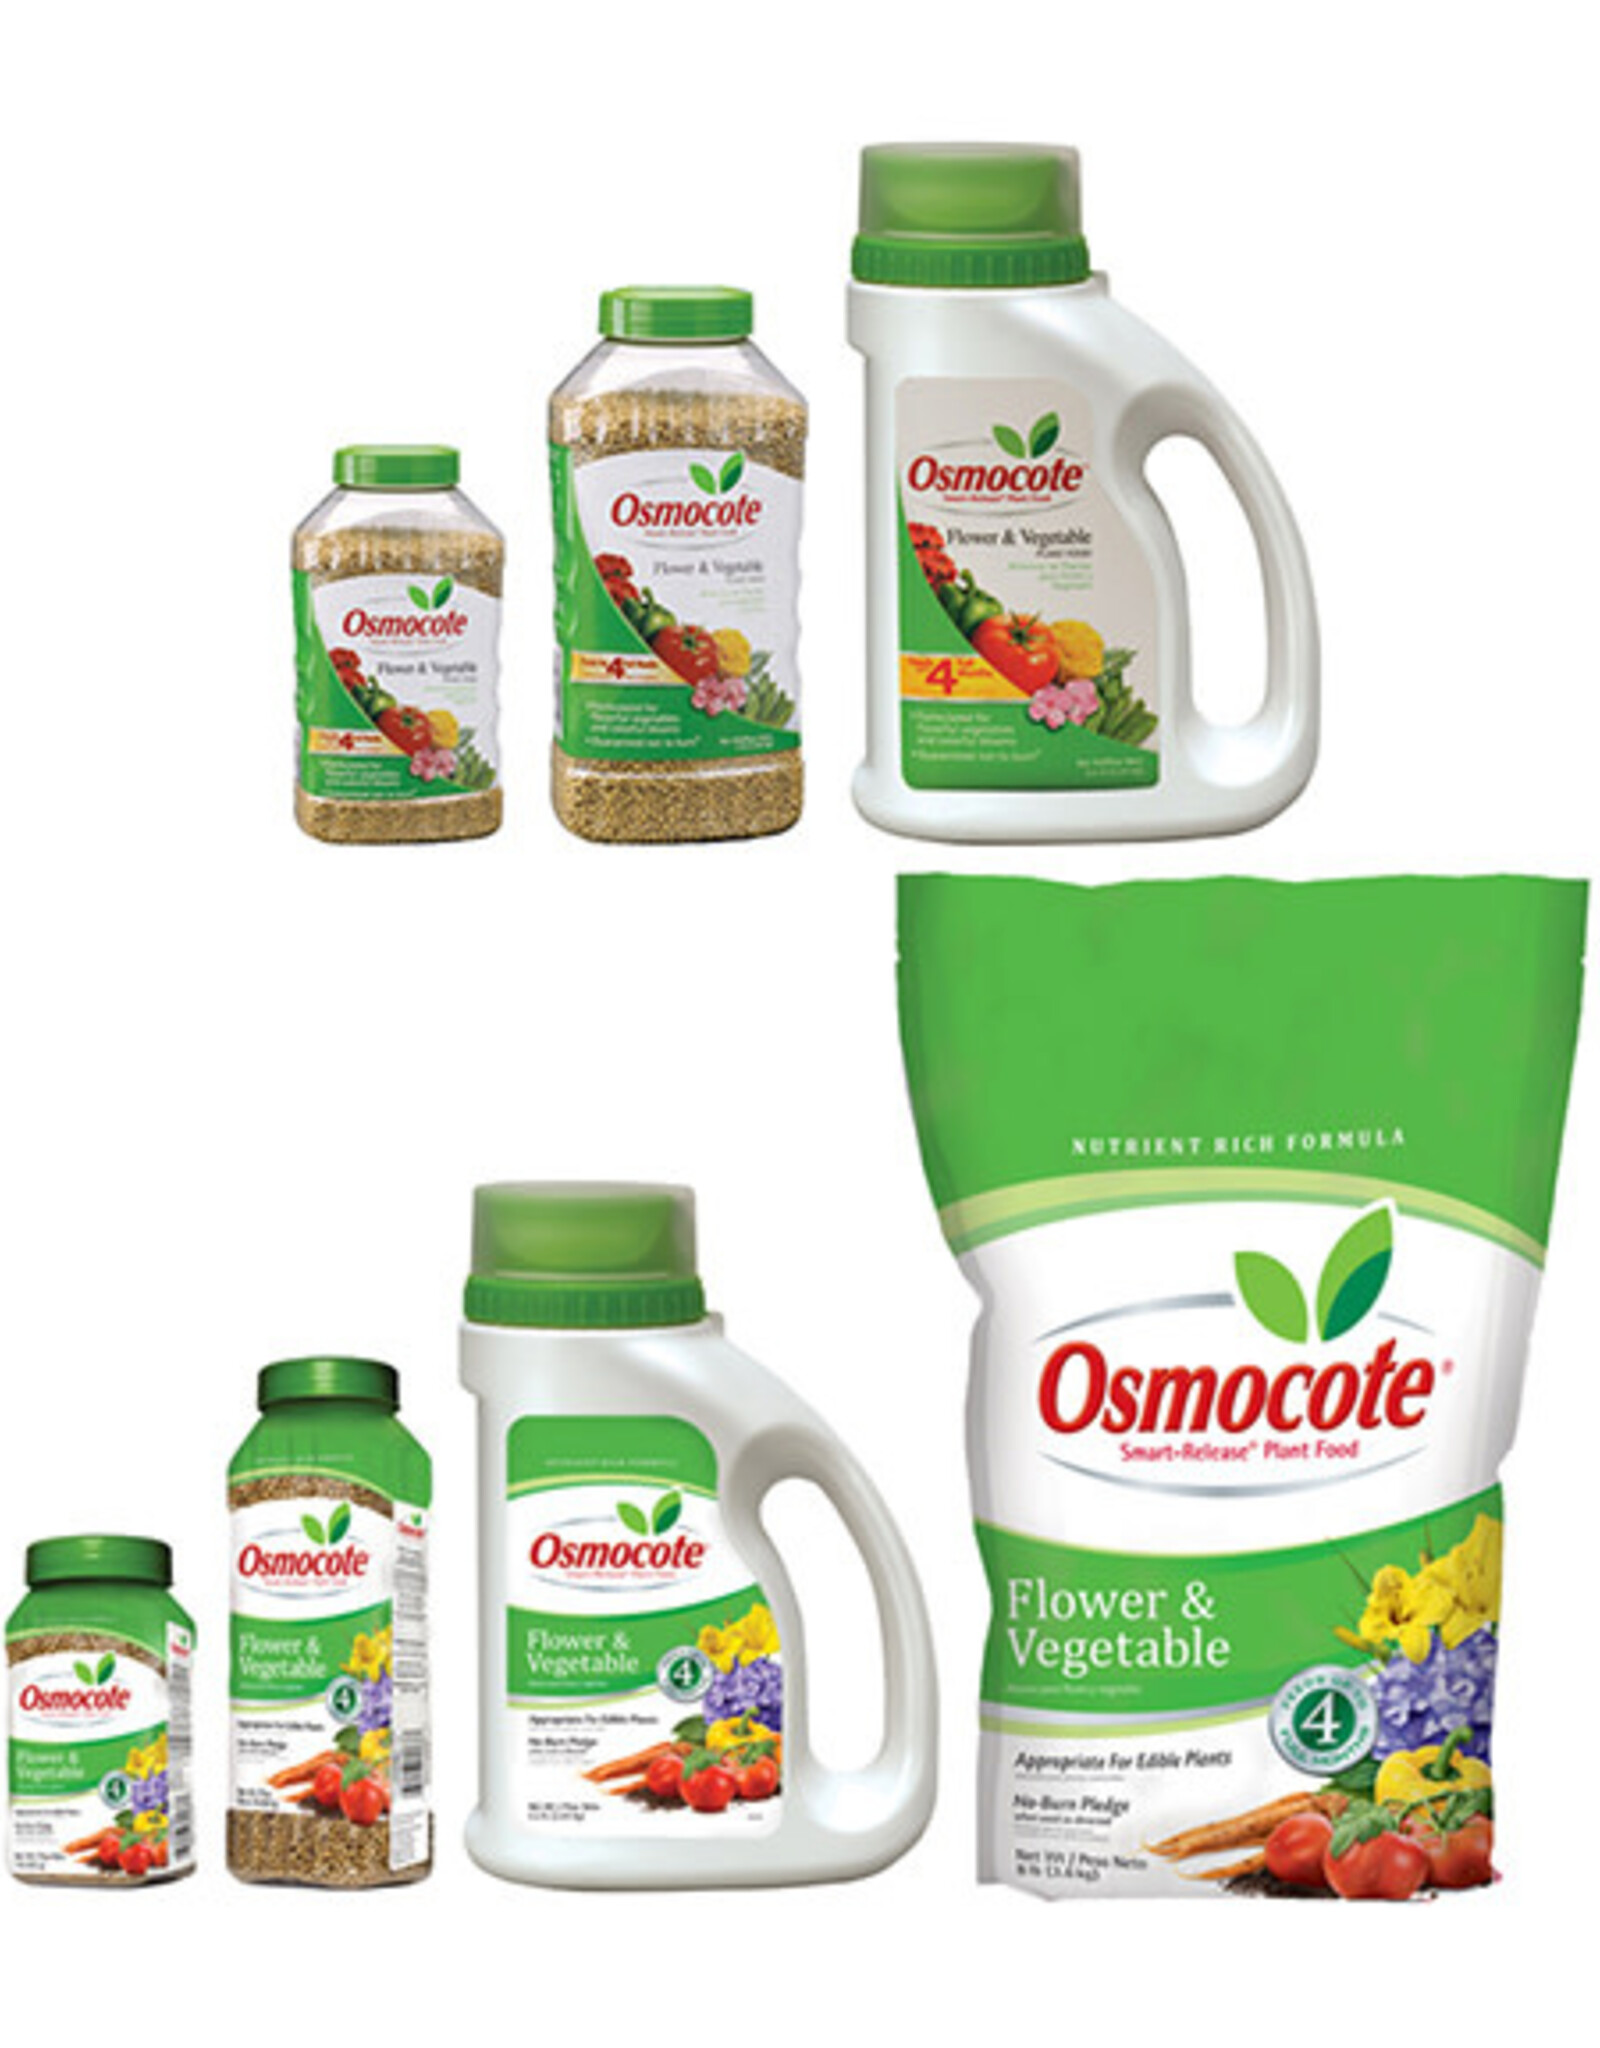 SCOTTS MIRACLE GRO PROD Osmocote® Flower & Vegetable Smart Release Plant Food 2 lb. 14-14-14